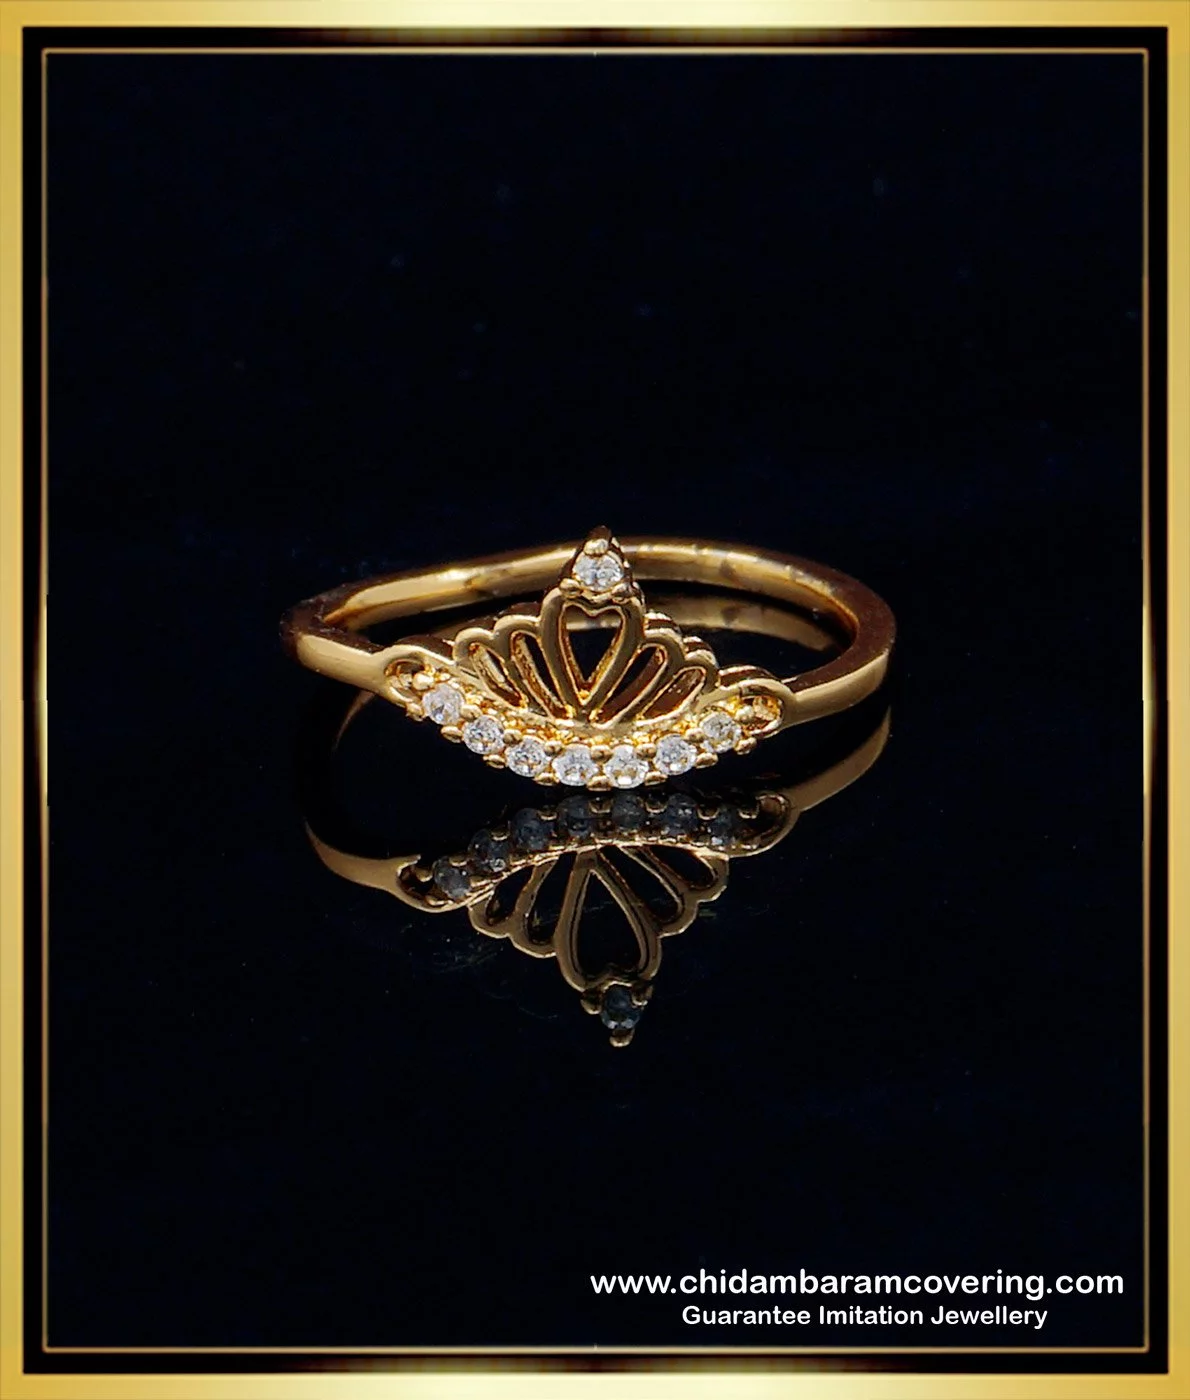 Buy Rosegold Crown Ring Online - Ferosh